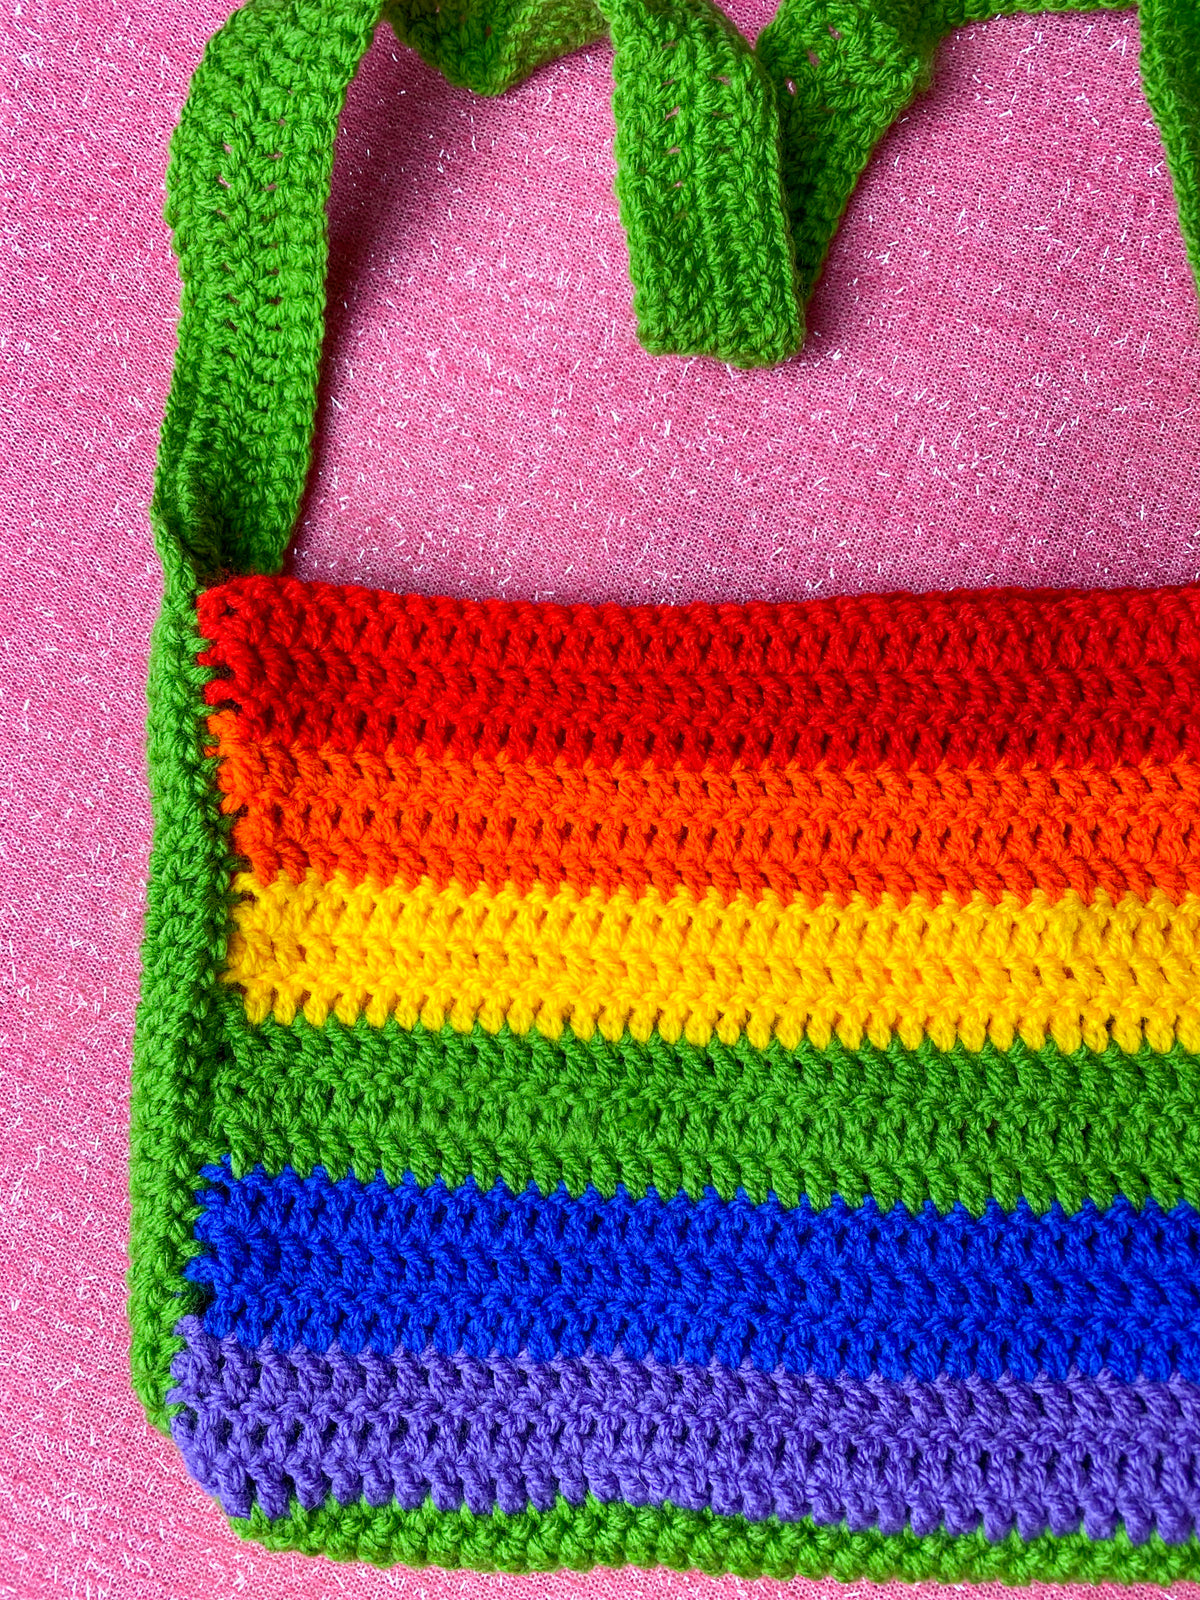 my green pride crochet bag